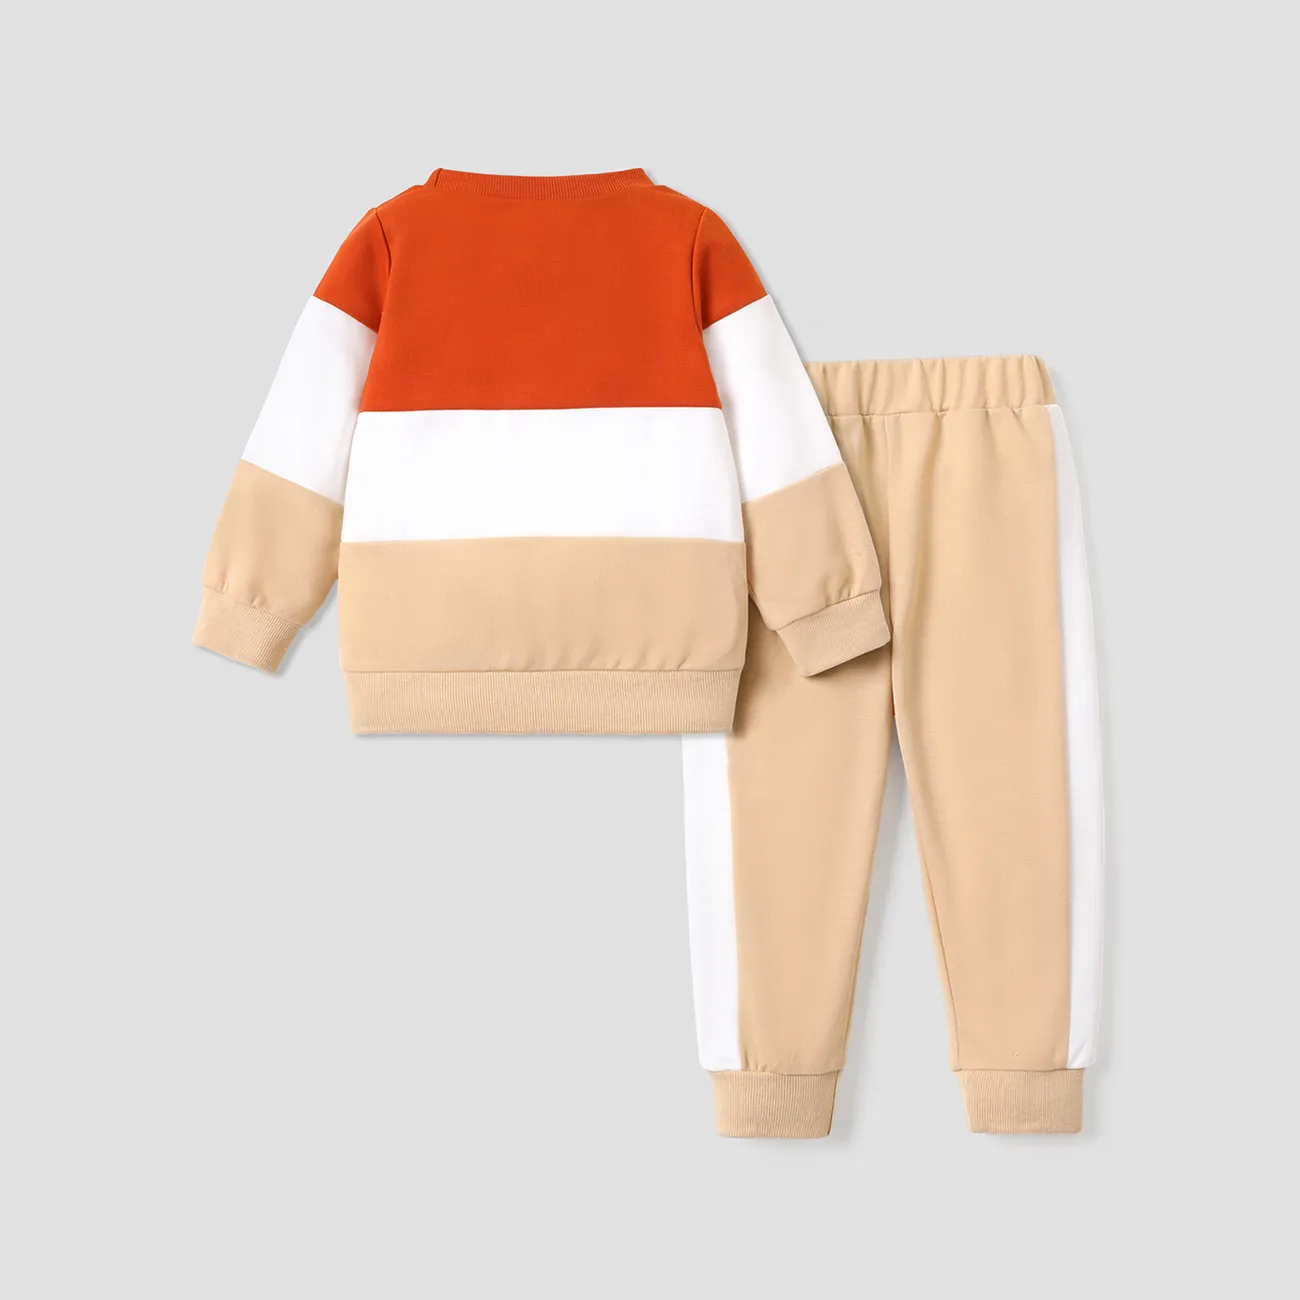 2 Stück Kleinkinder Jungen Hypertaktil Avantgardistisch Sweatshirt-Sets Aprikose big image 1